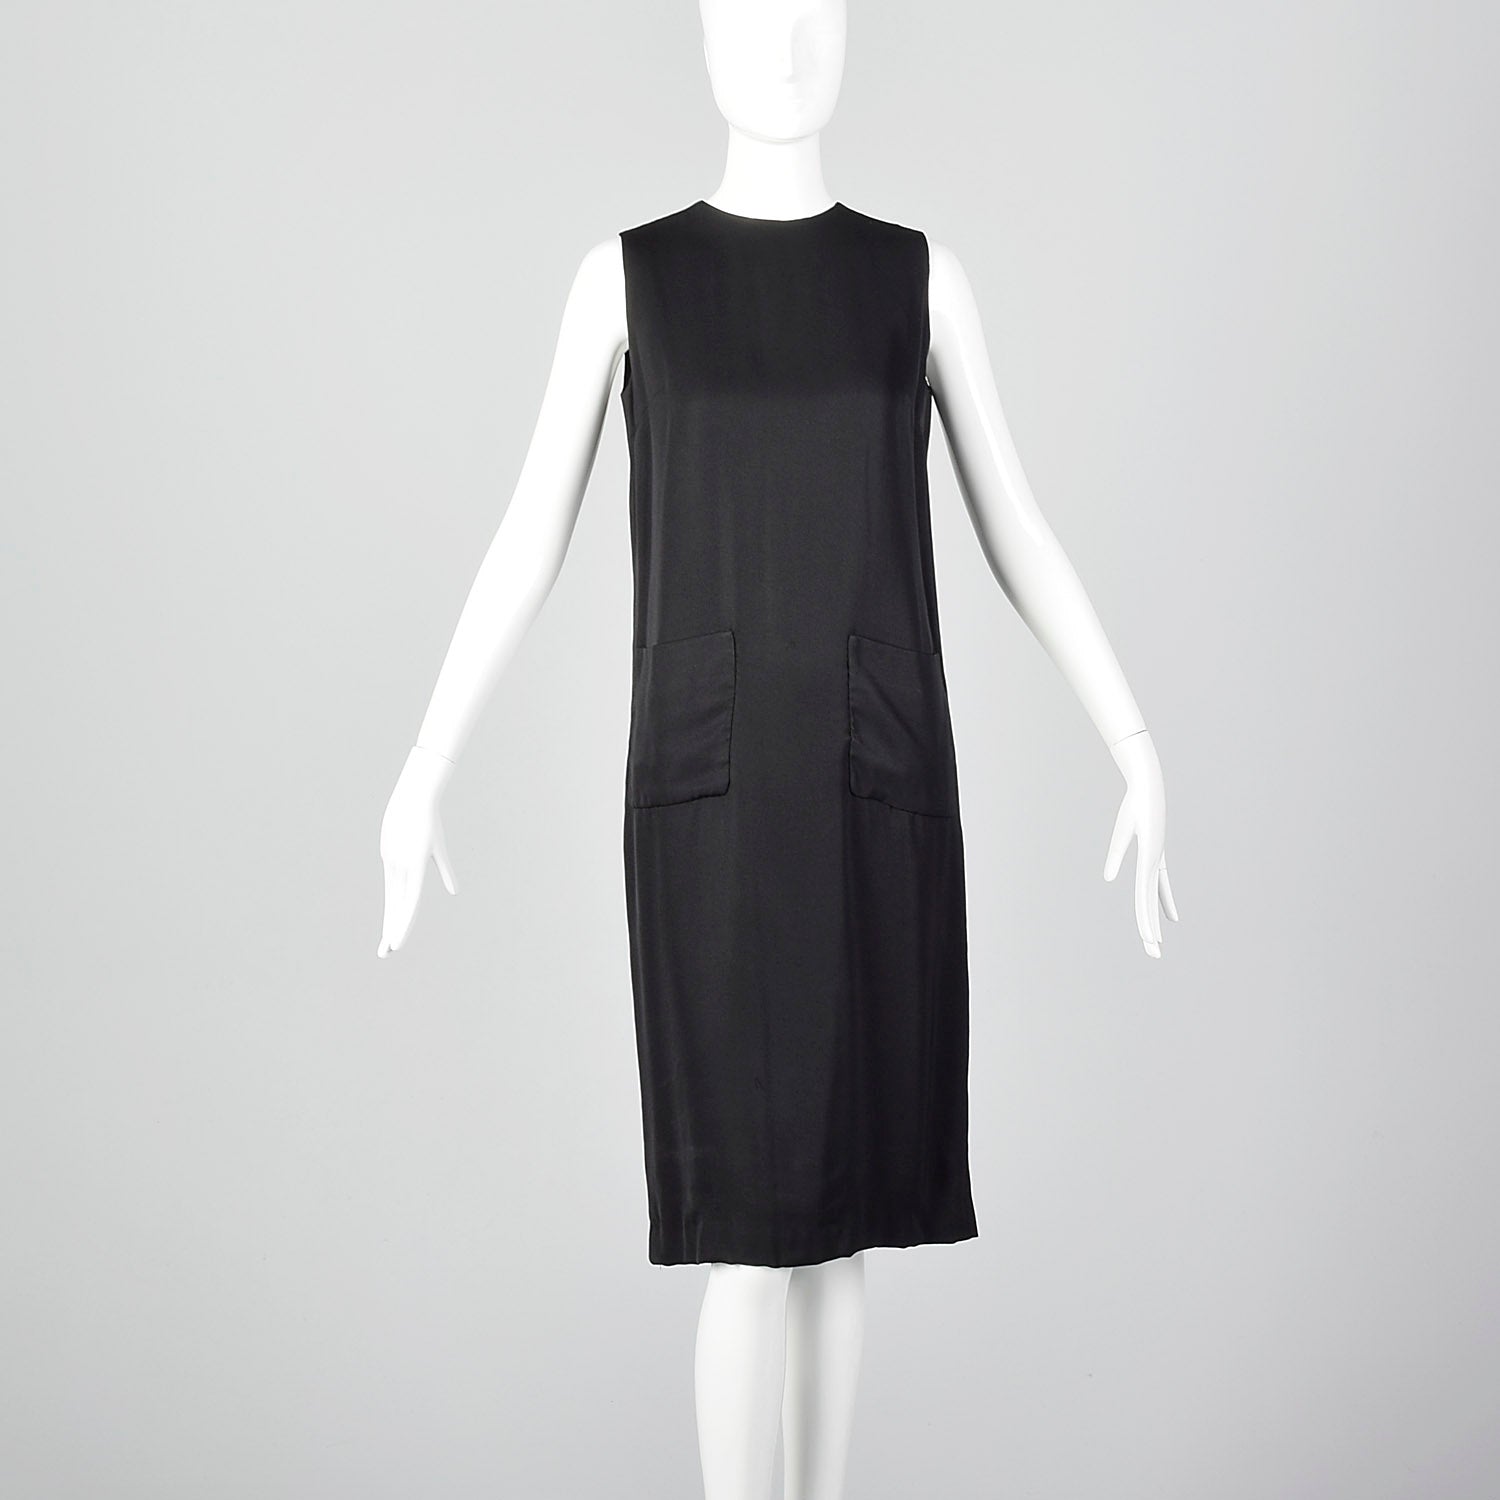 Small 1960s Sleeveless Black Dress